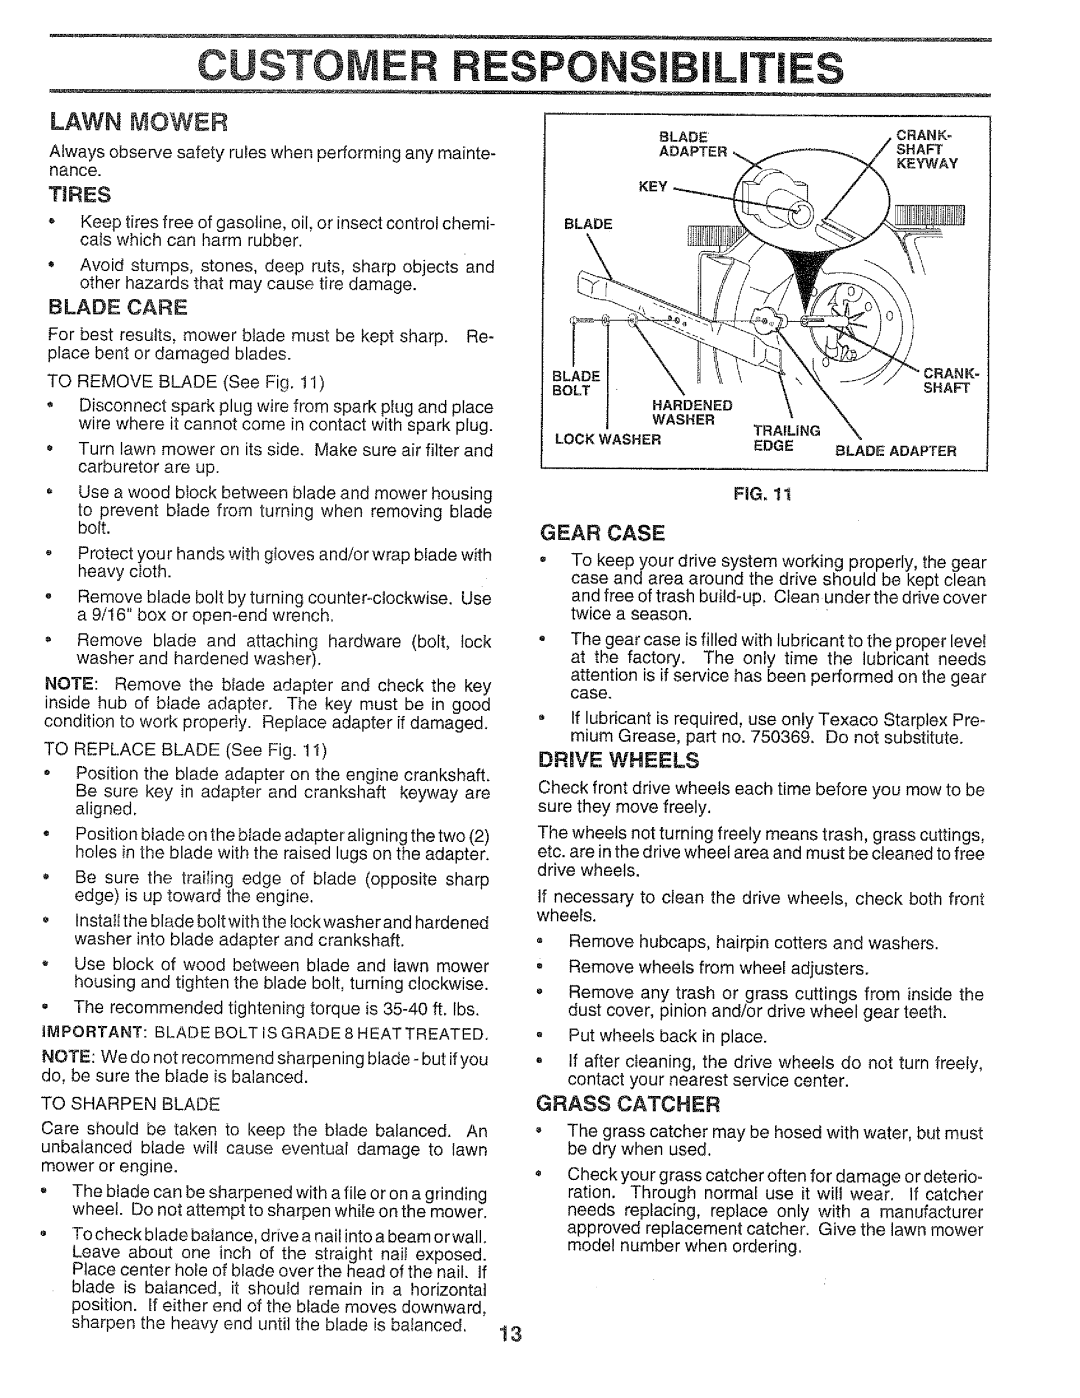 Craftsman 917.37459 owner manual Customer Respons Bilities, Lawn Mower, Tires, Gear Case 